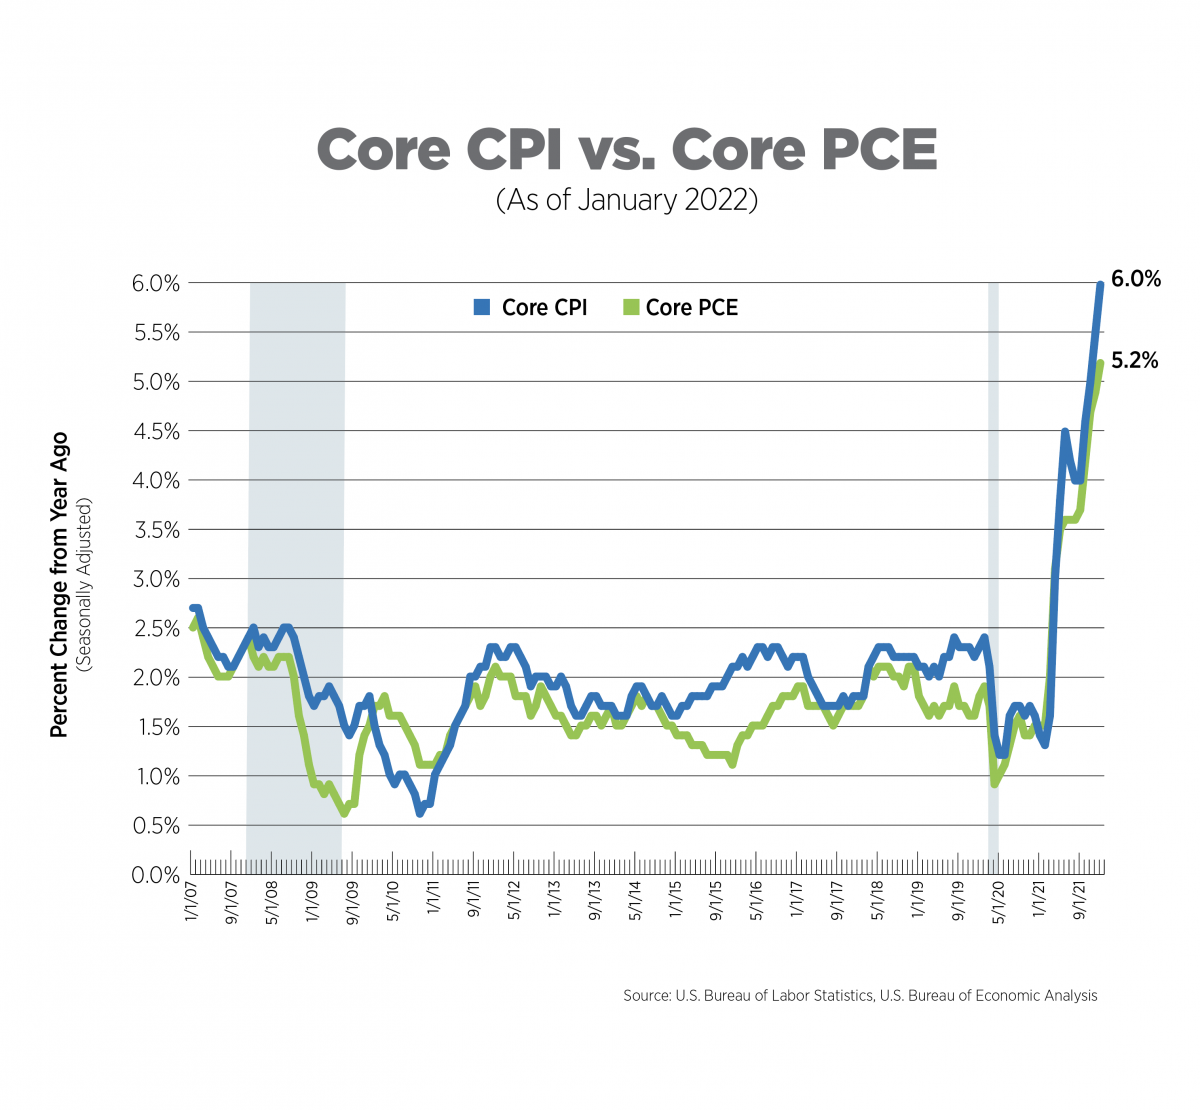 core cpi vs core pce, as of january 2022